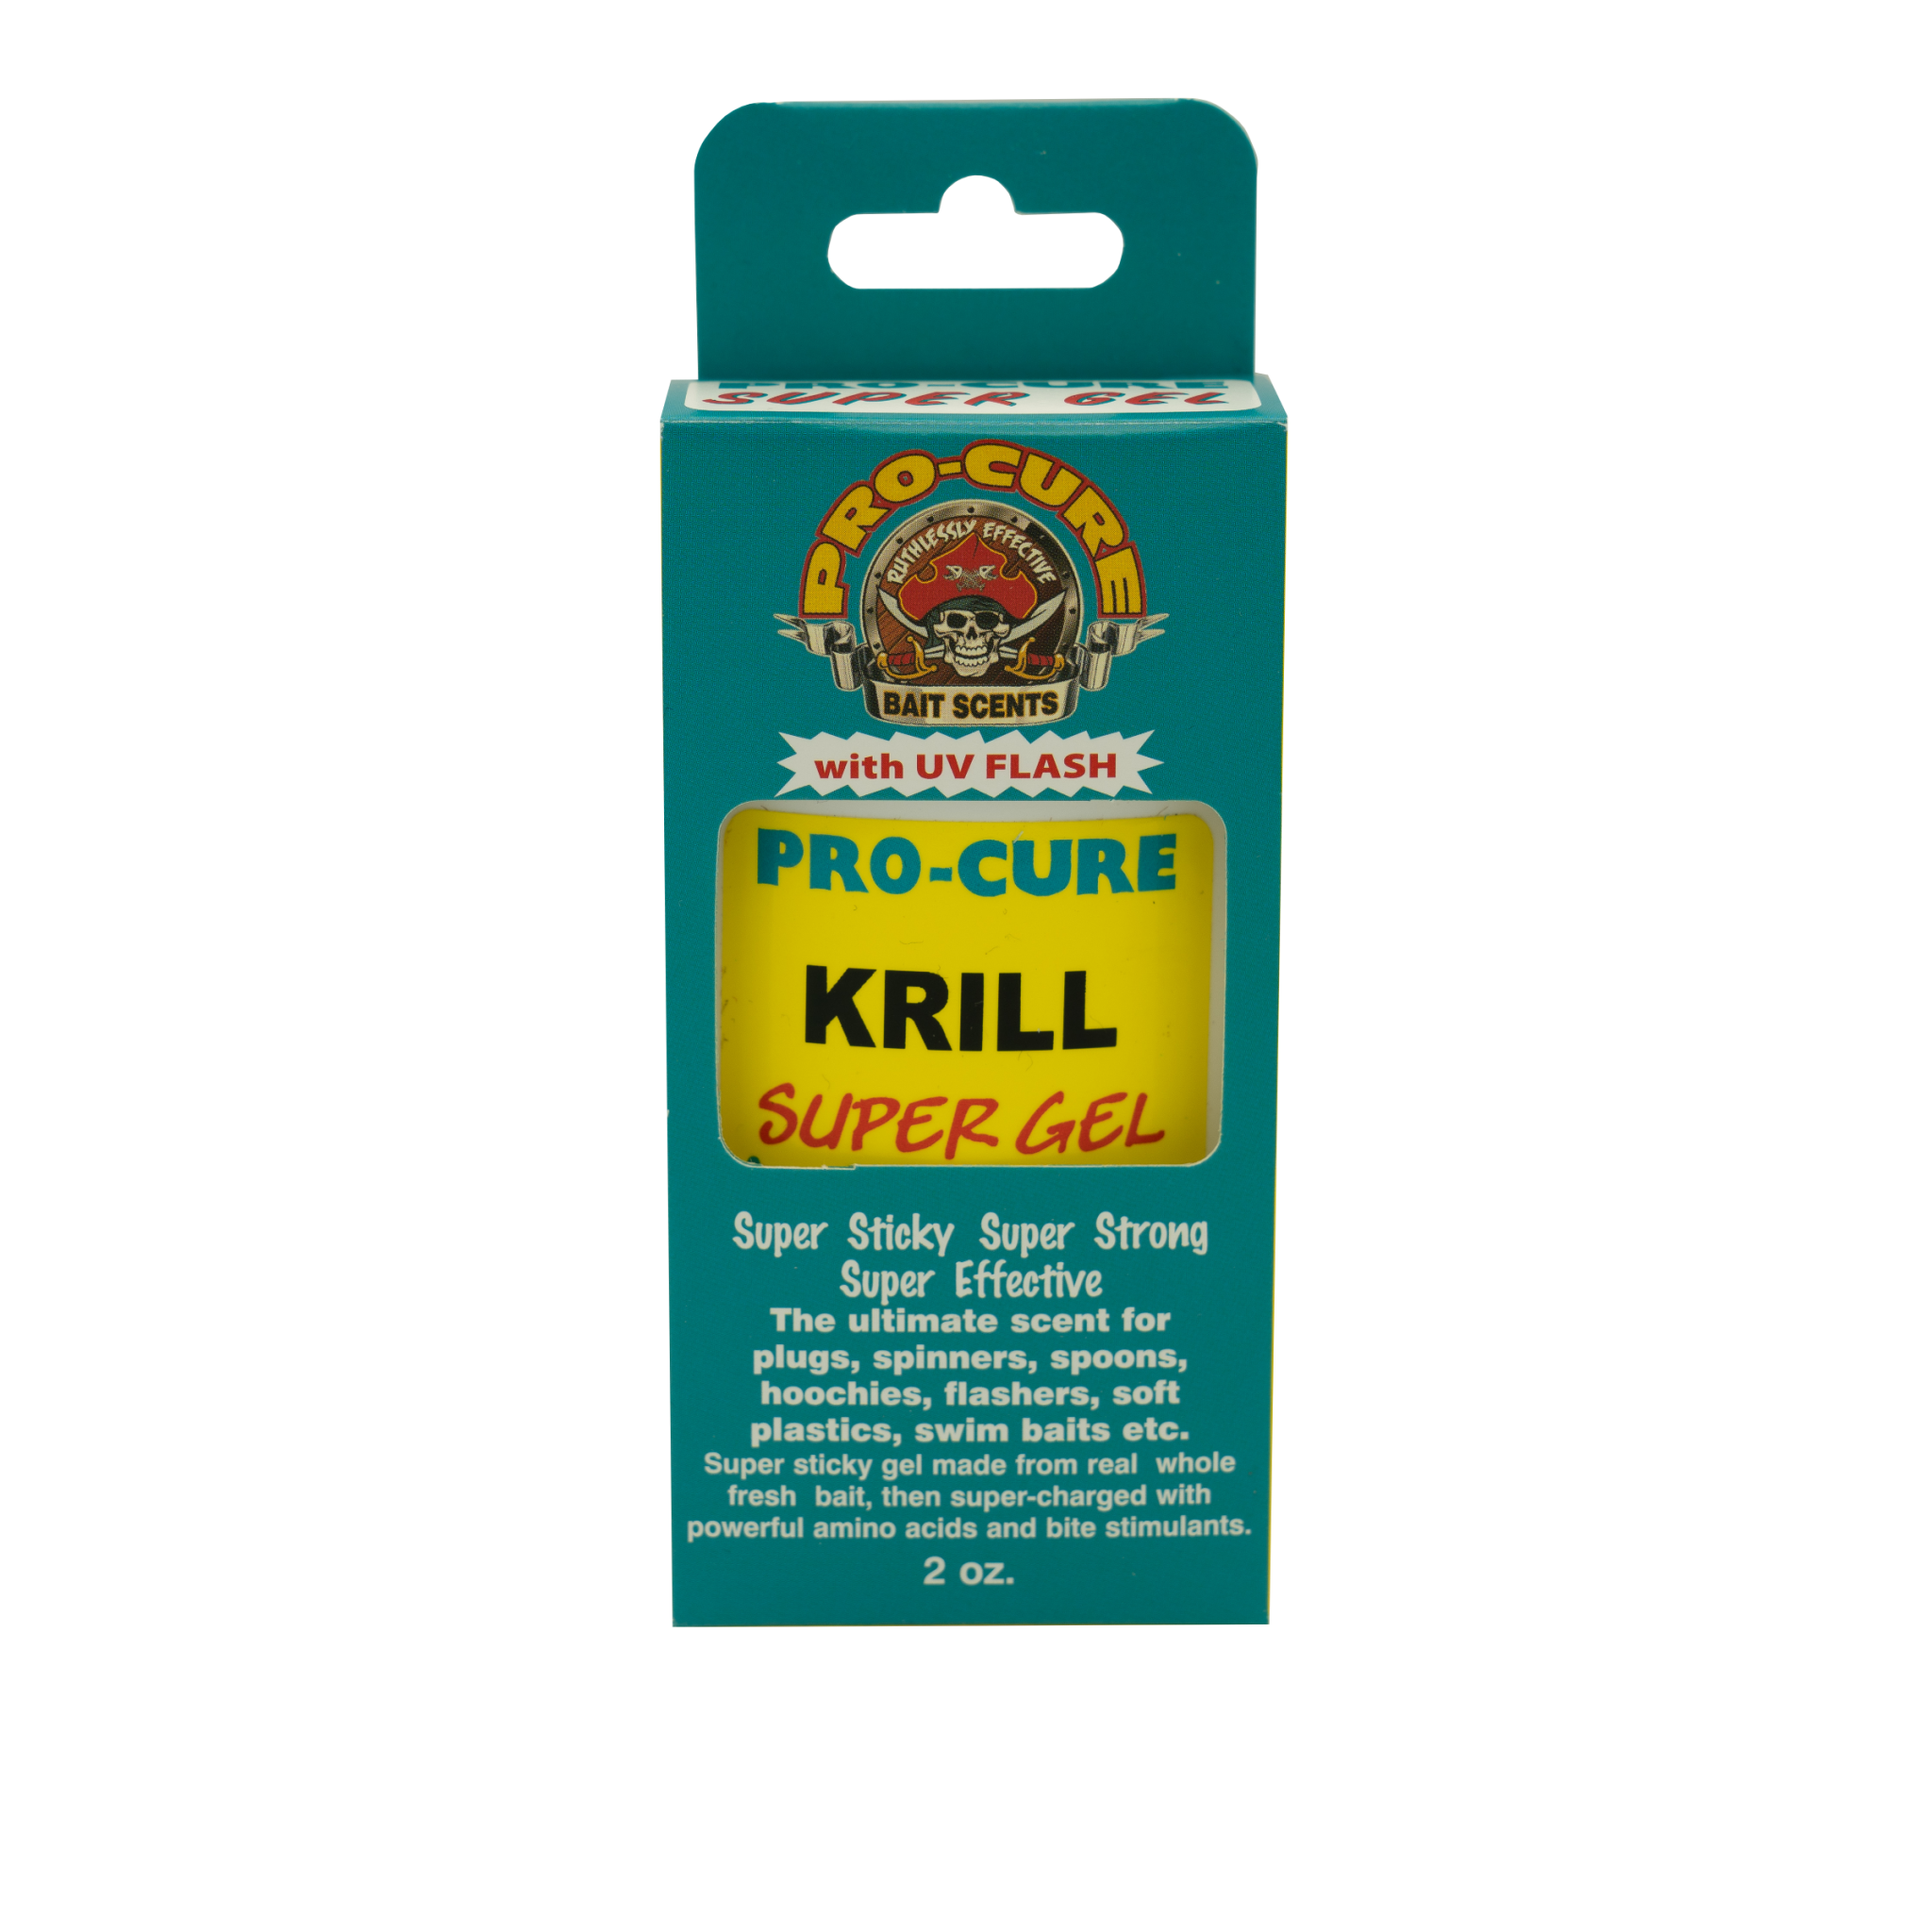 KRILL SUPER GEL – Pro-Cure, Inc